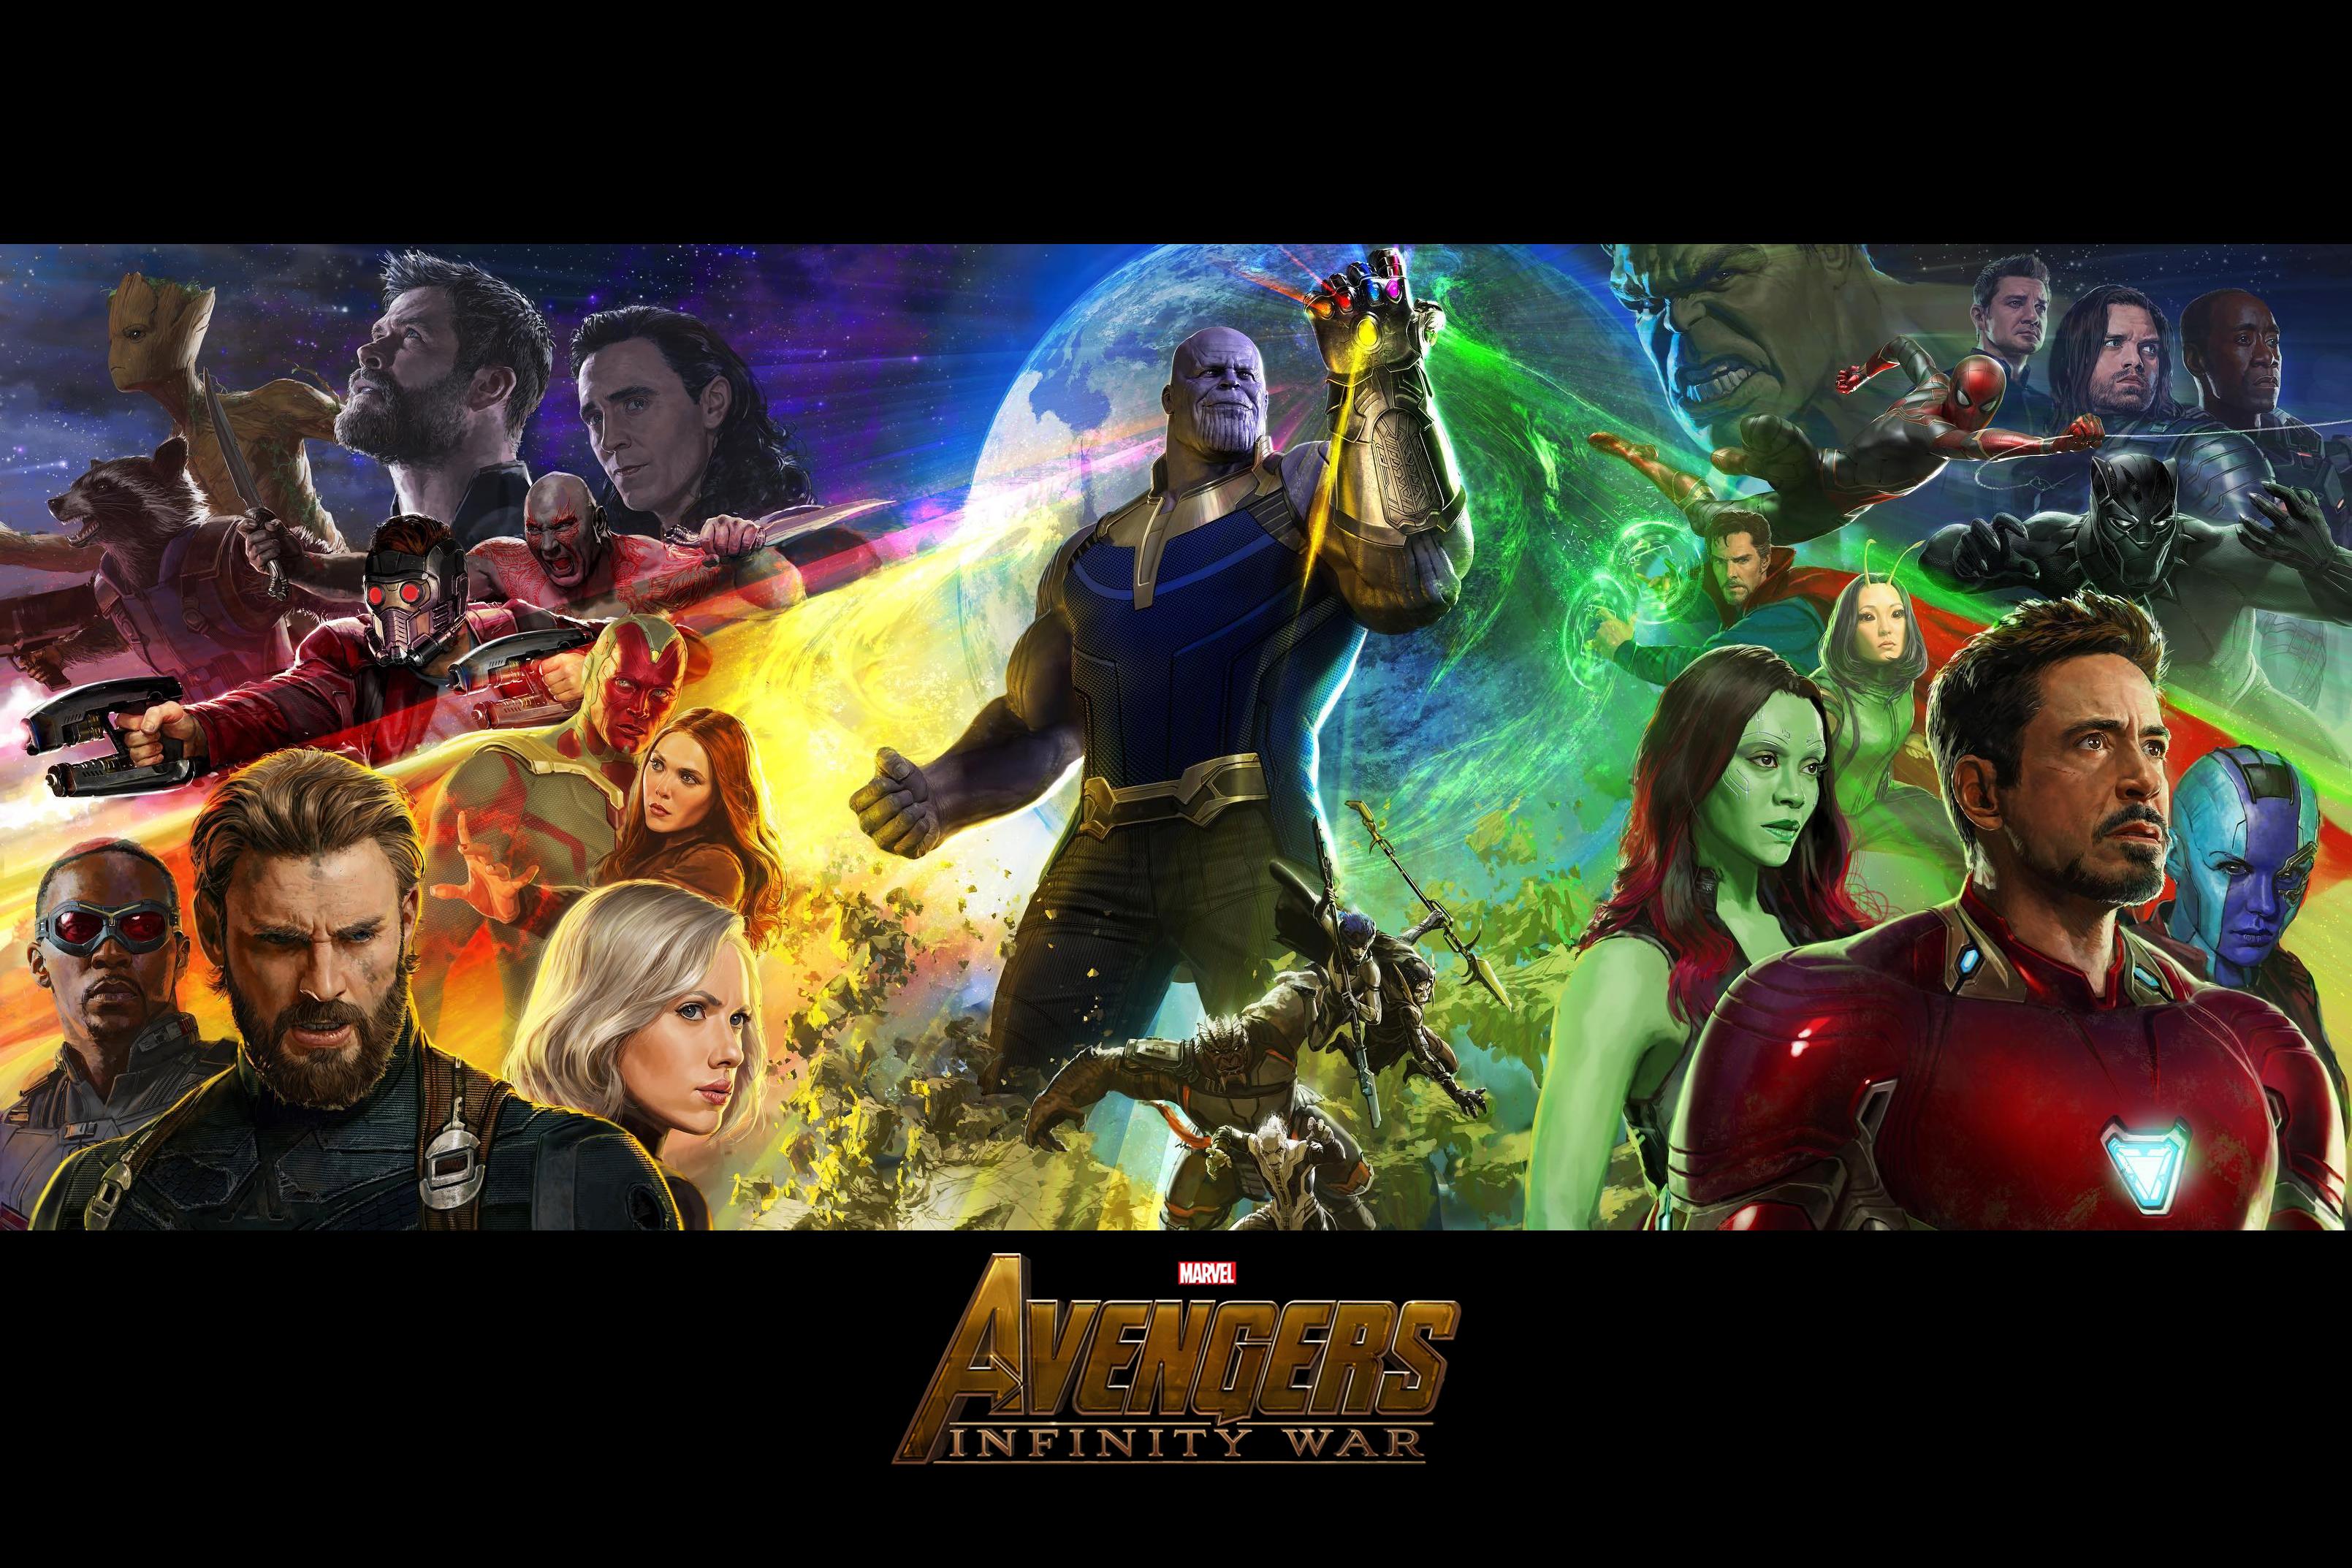 Avengers: Infinity War Picture by Ryan Meinerding